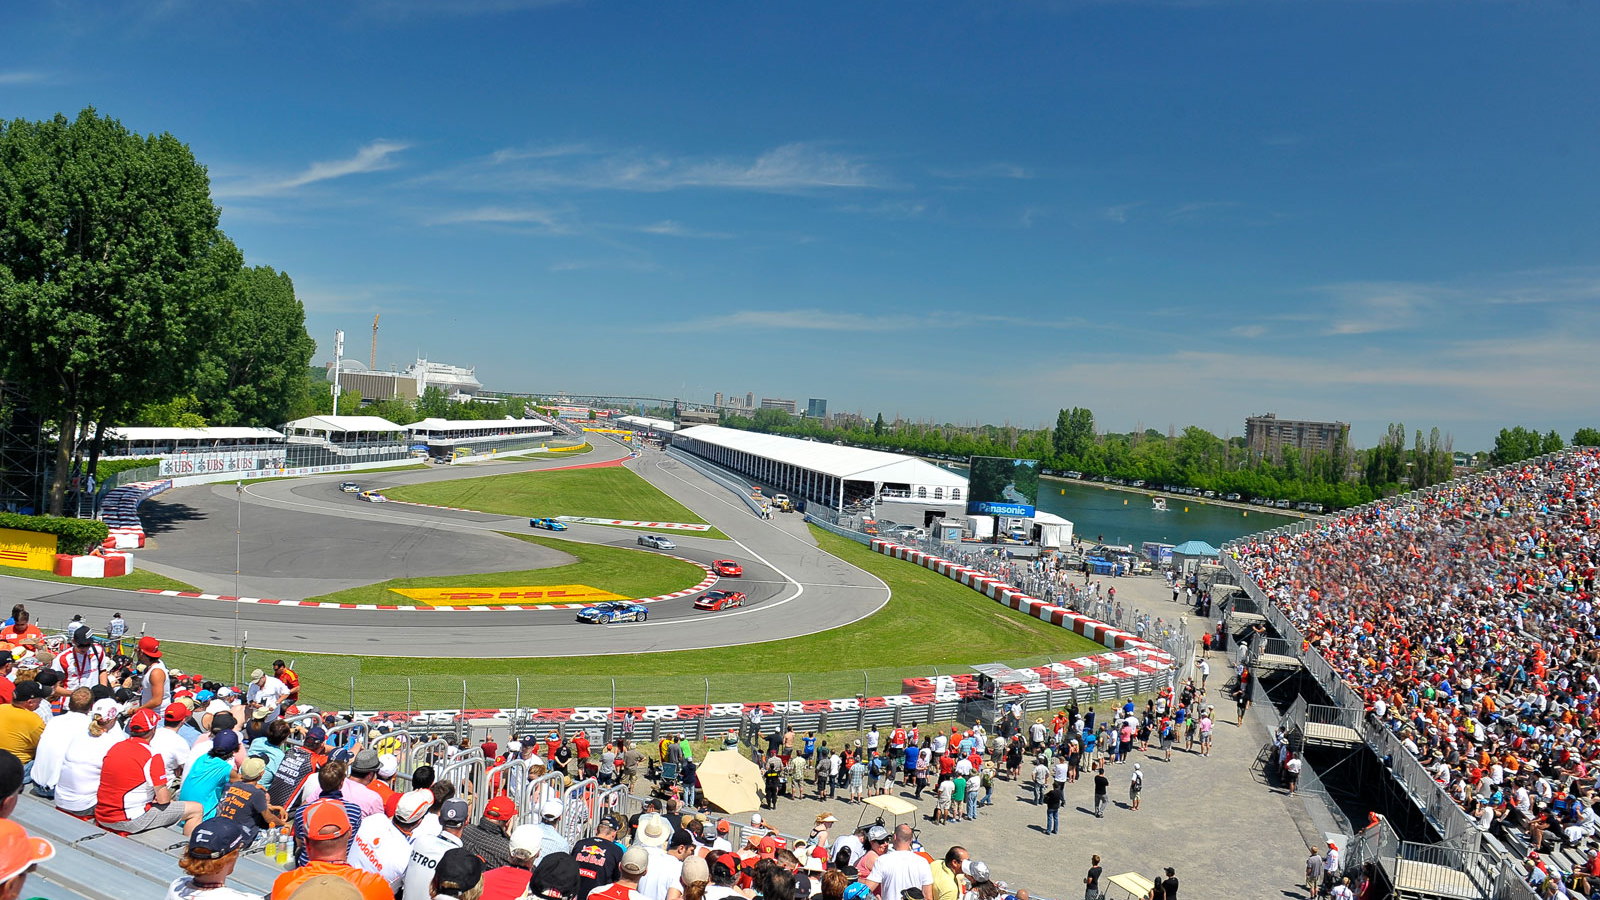 Circuit Gilles Villeneuve, home of the Formula 1 Canadian Grand Prix